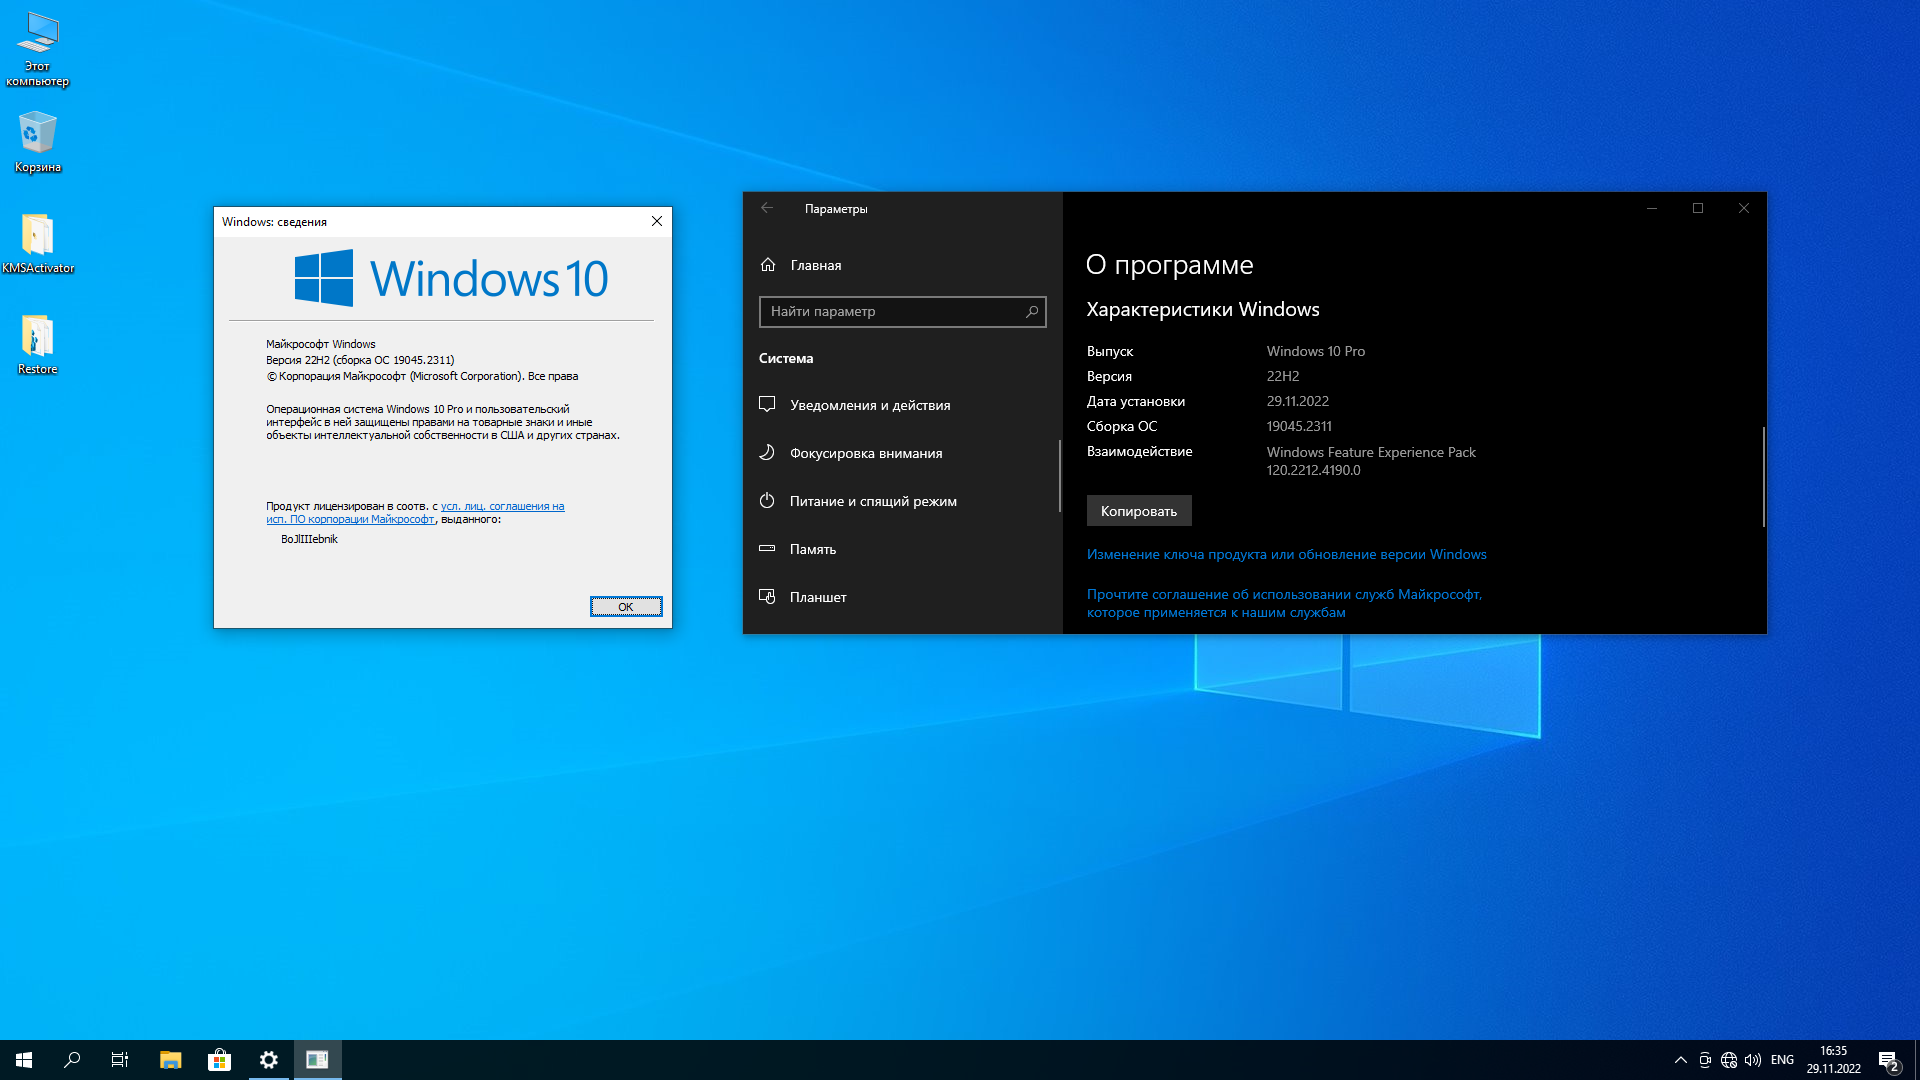 Windows 10 64 home 22h2. Windows 10, версия 22h2. Windows 10 2022 l версия 22h2. Вторая версия Windows. Windows 10 домашняя 22h2.